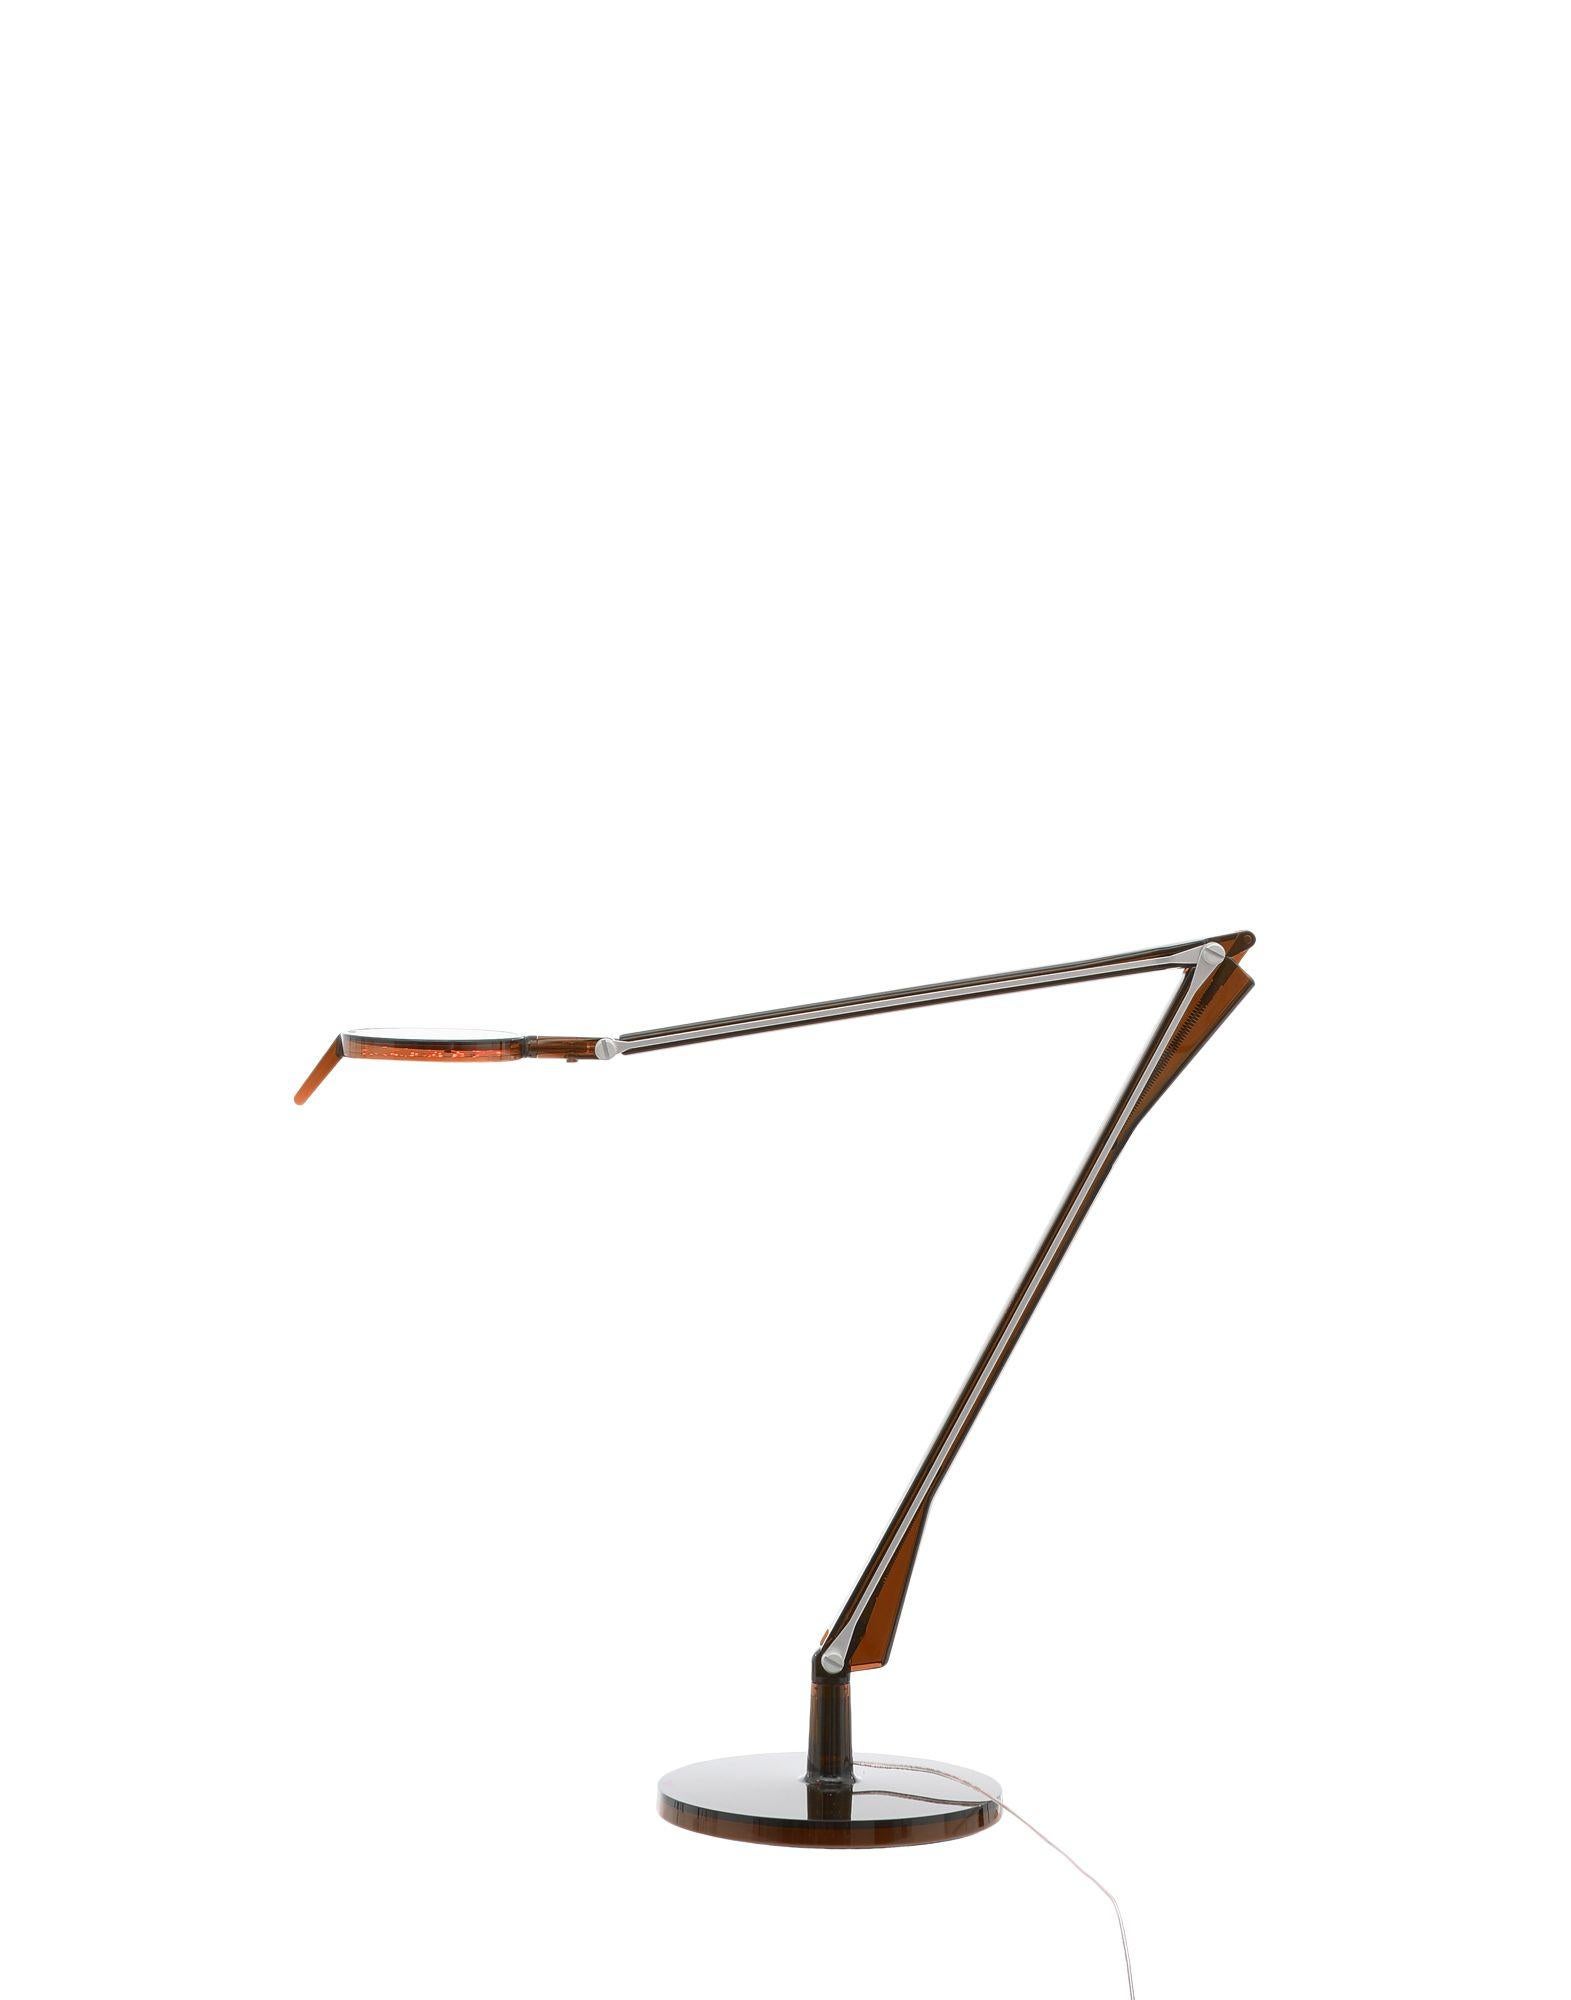 Kartell Aledin Dec Desk Lamp in Amber by Alberto e Francesco Meda In New Condition For Sale In Brooklyn, NY